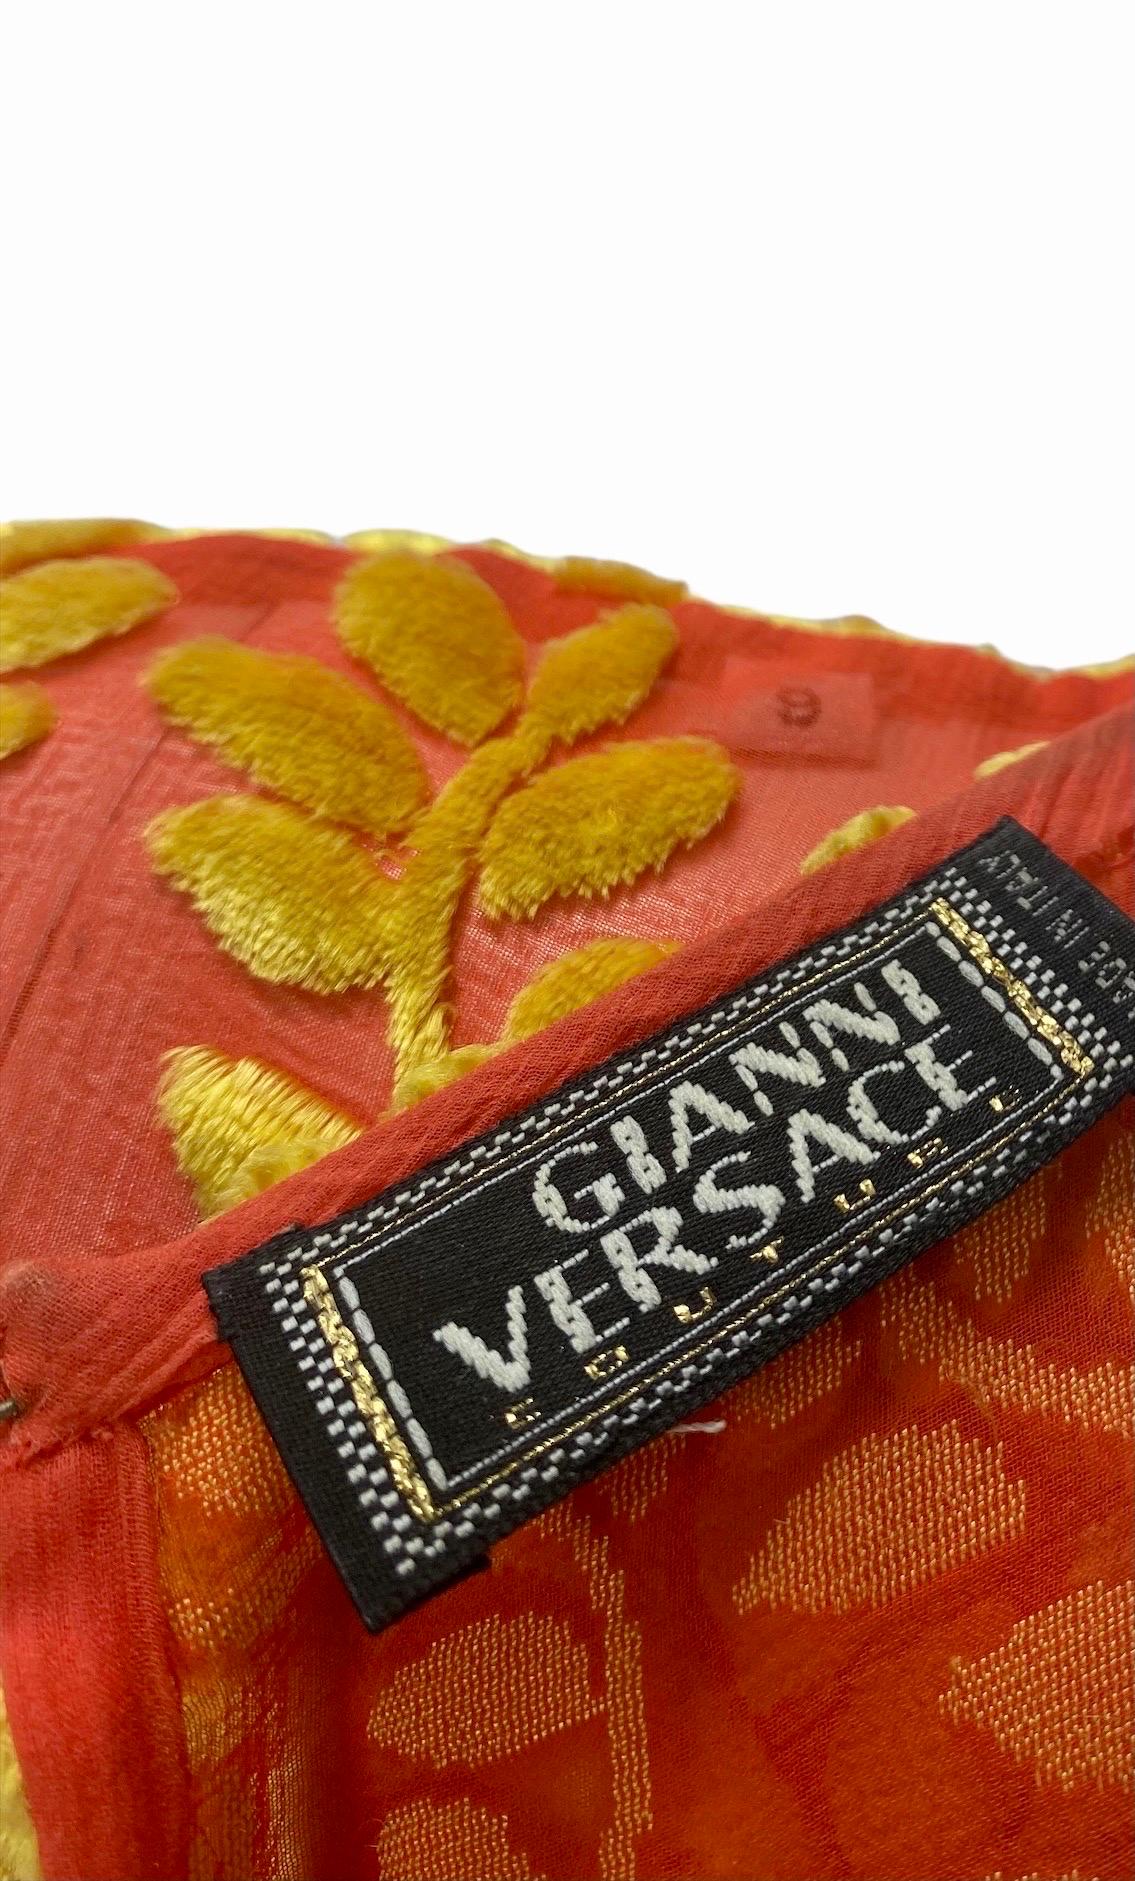 S/S 1997 Vintage Gianni Versace Couture Floral Devore Velvet Shirt For Sale 2